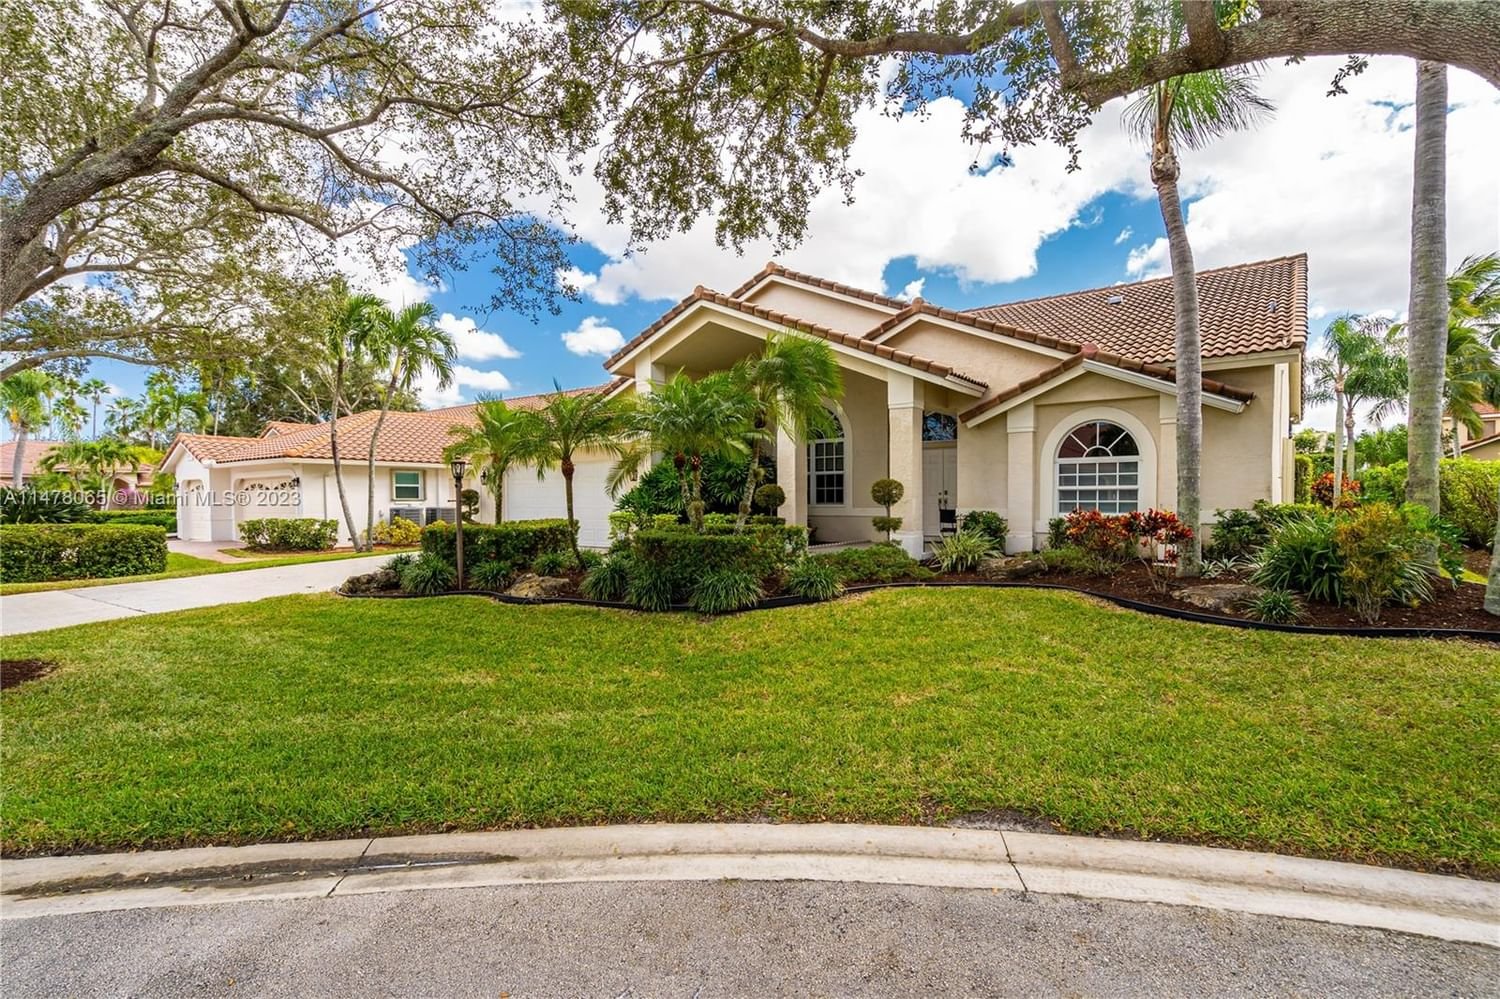 Real estate property located at 10628 49th Ct, Broward County, KENSINGTON, Coral Springs, FL